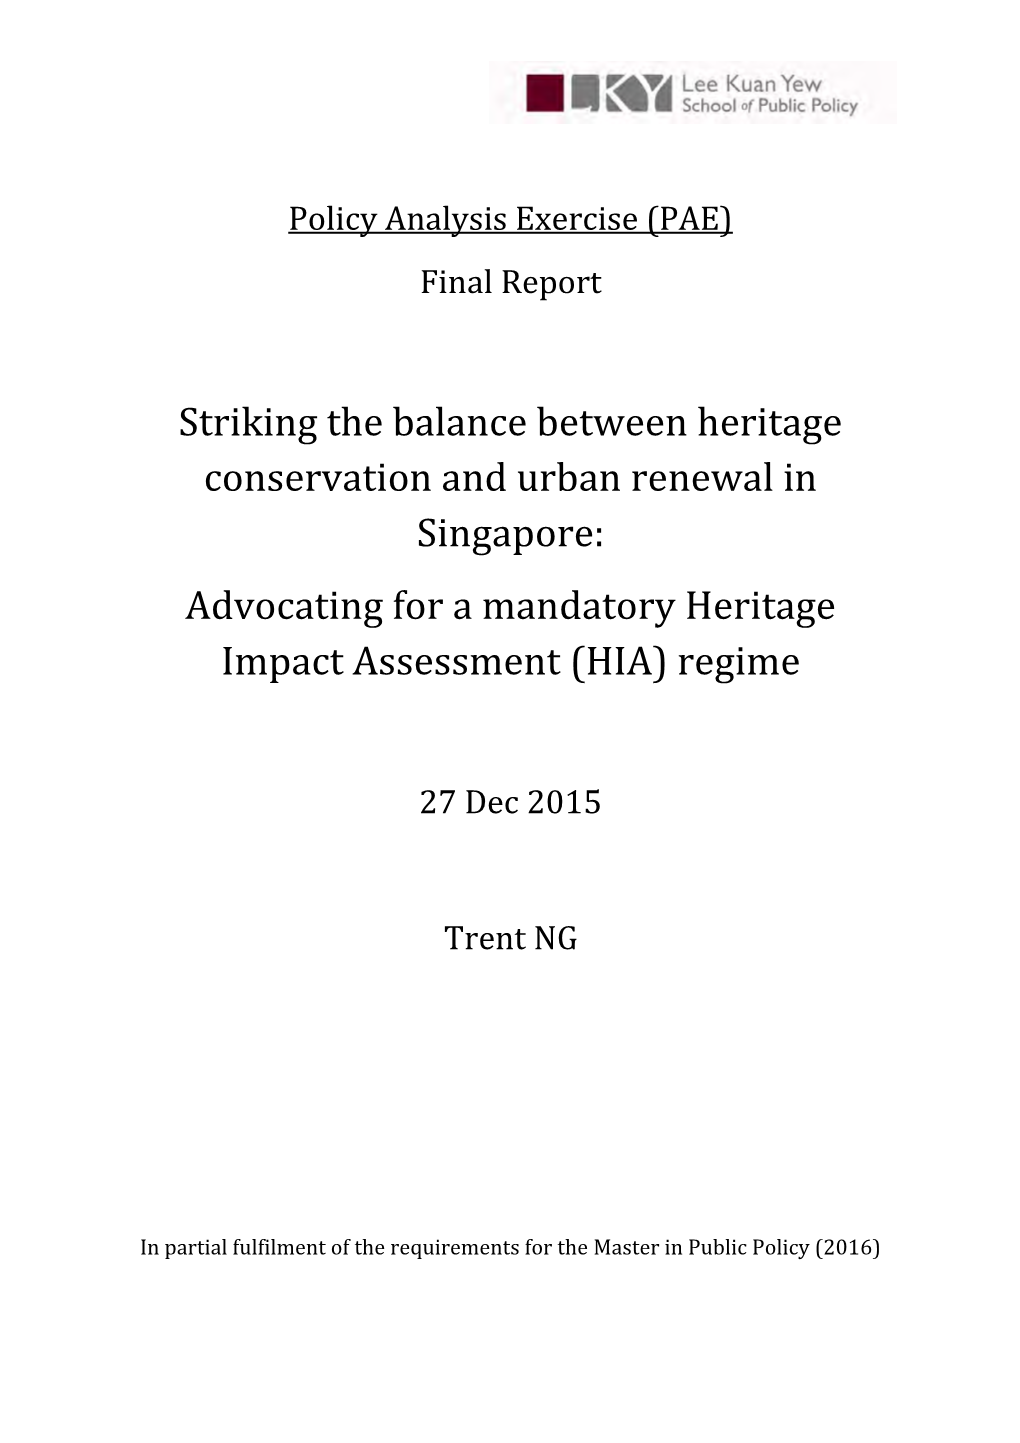 Advocating for a Mandatory Heritage Impact Assessment (HIA) Regime